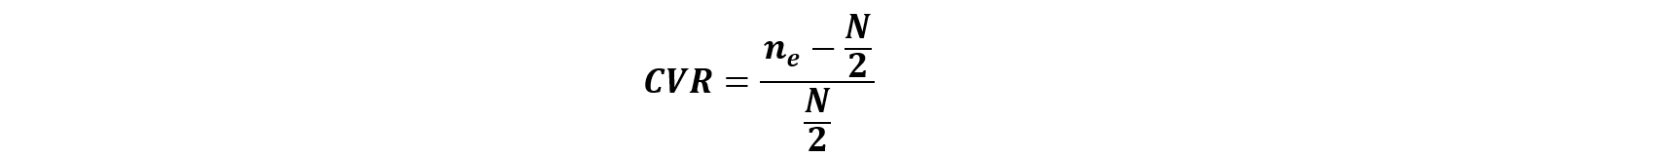 
Ecuación Razón de Validez de Contenido (CVR) Método de Lawshe.
